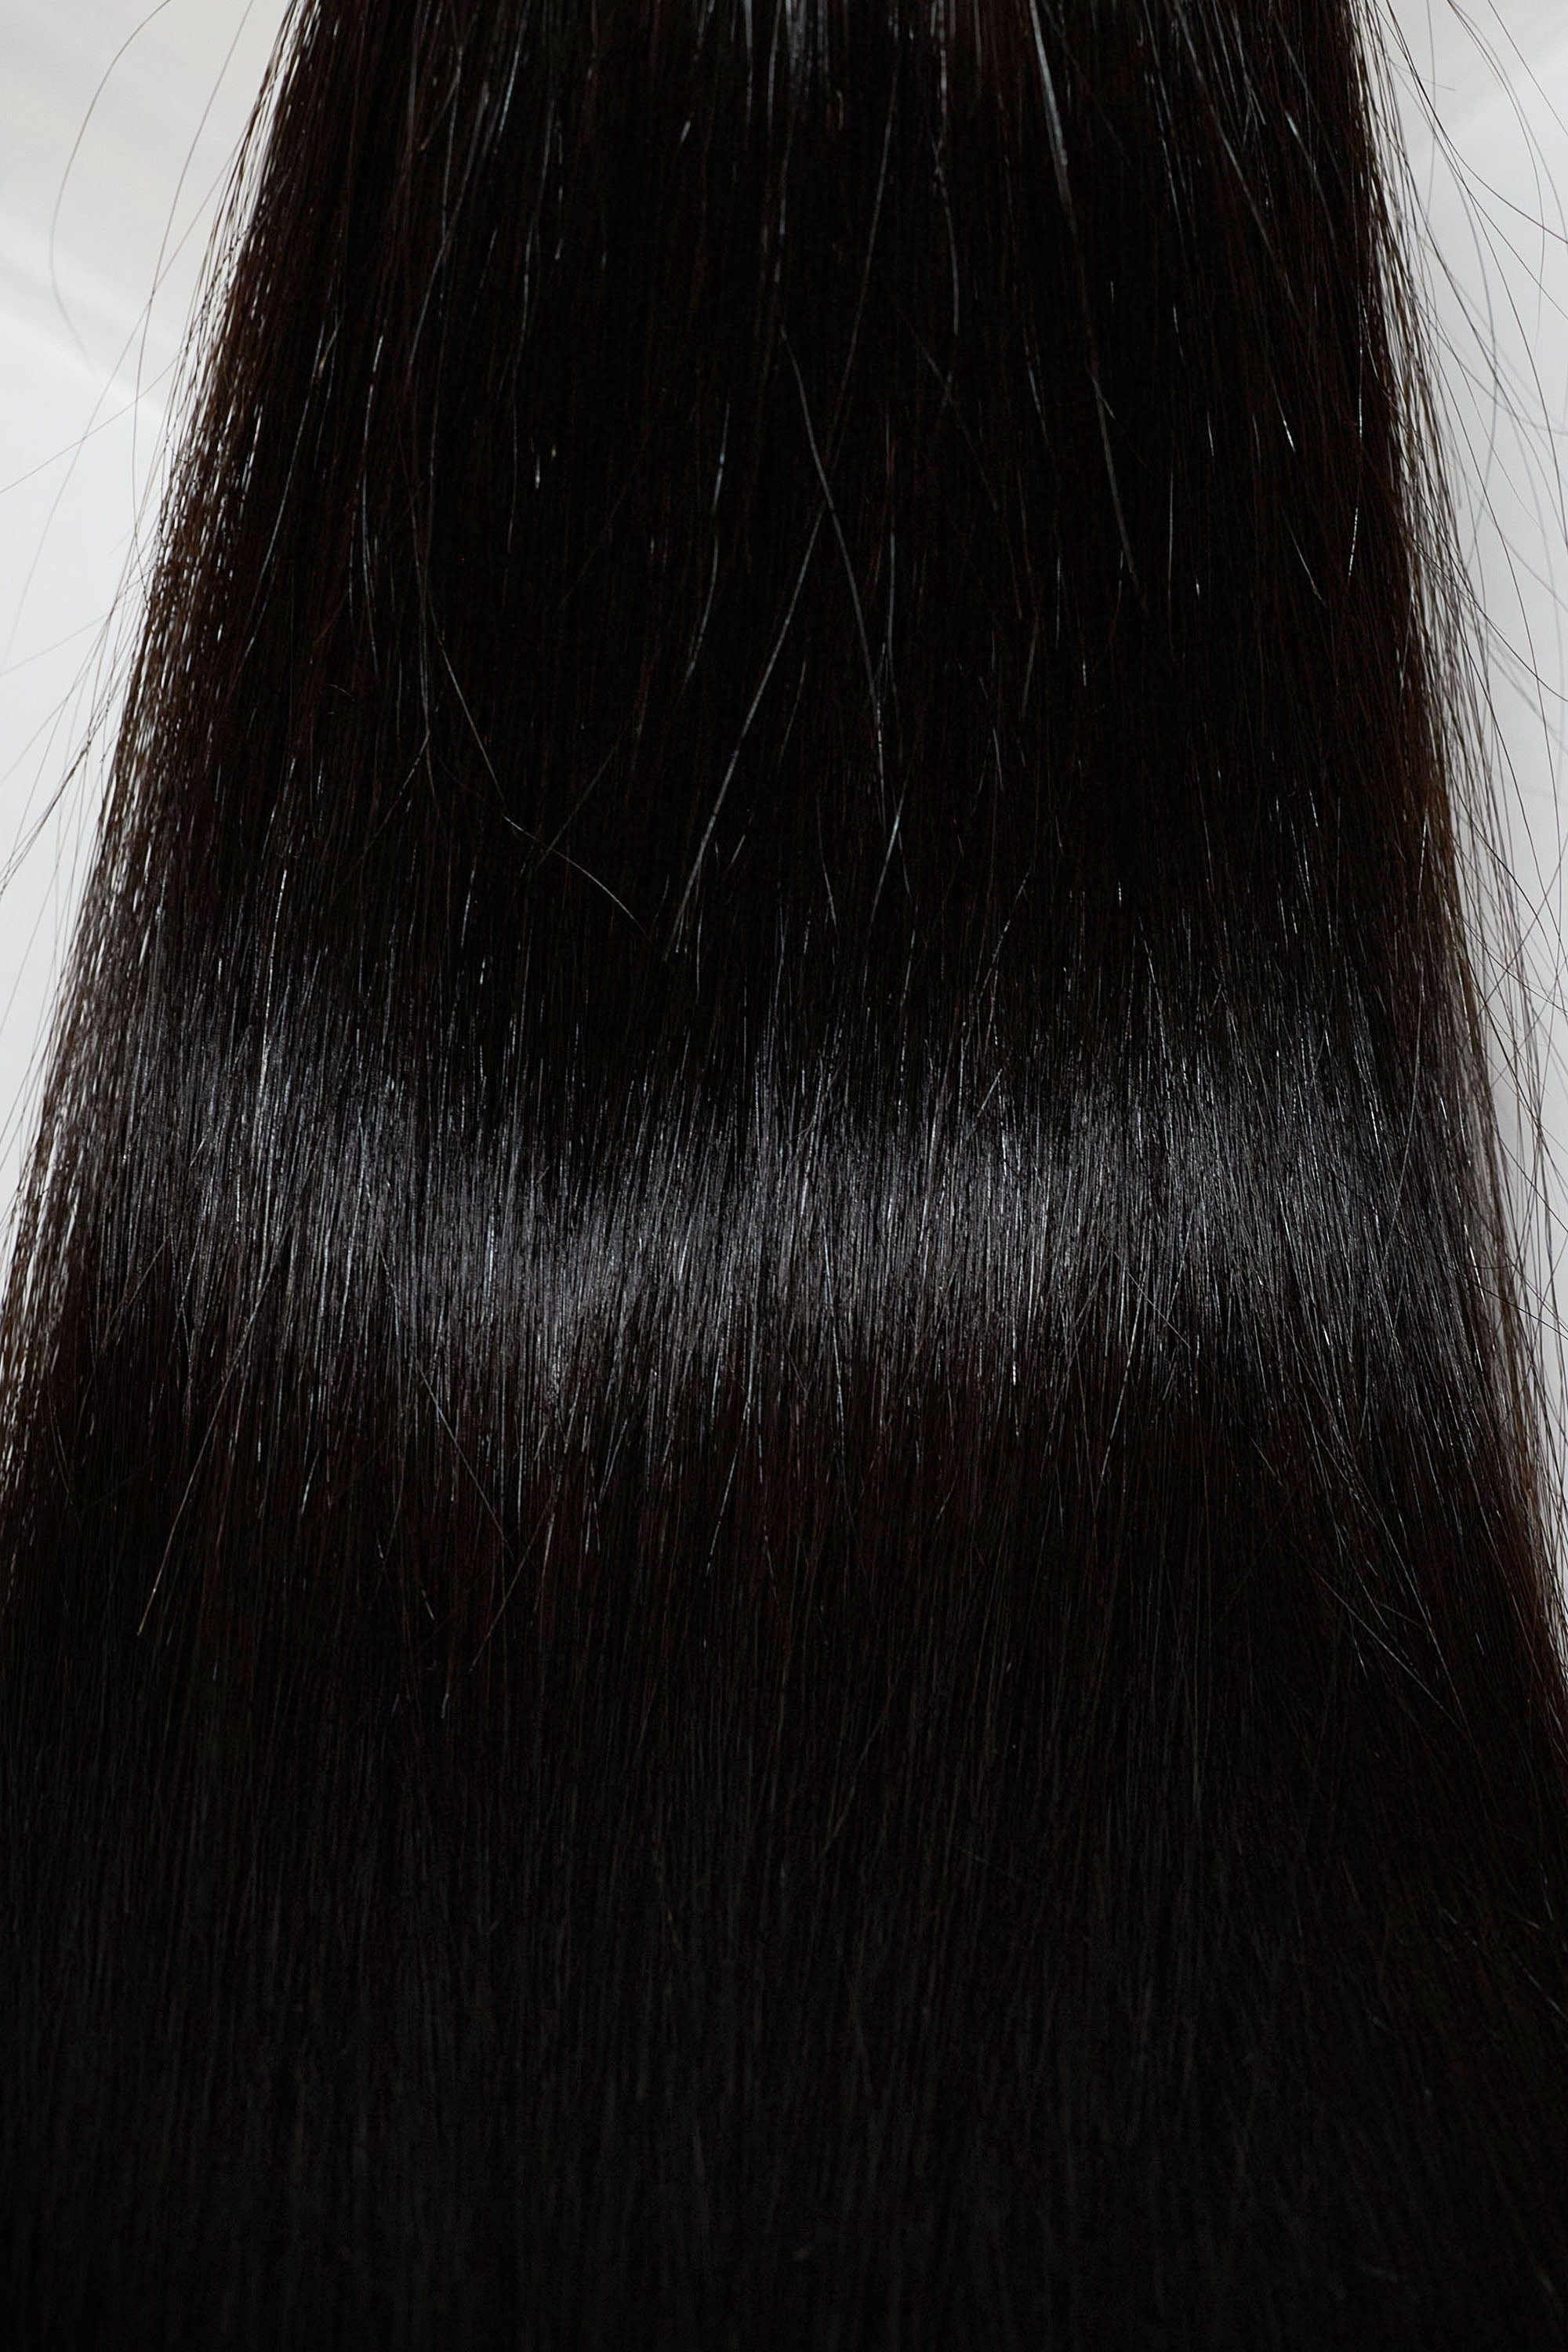 Behair professional Keratin Tip "Premium" 16" (40cm) Natural Straight Jet Black #1 - 25g (1g each pcs) hair extensions